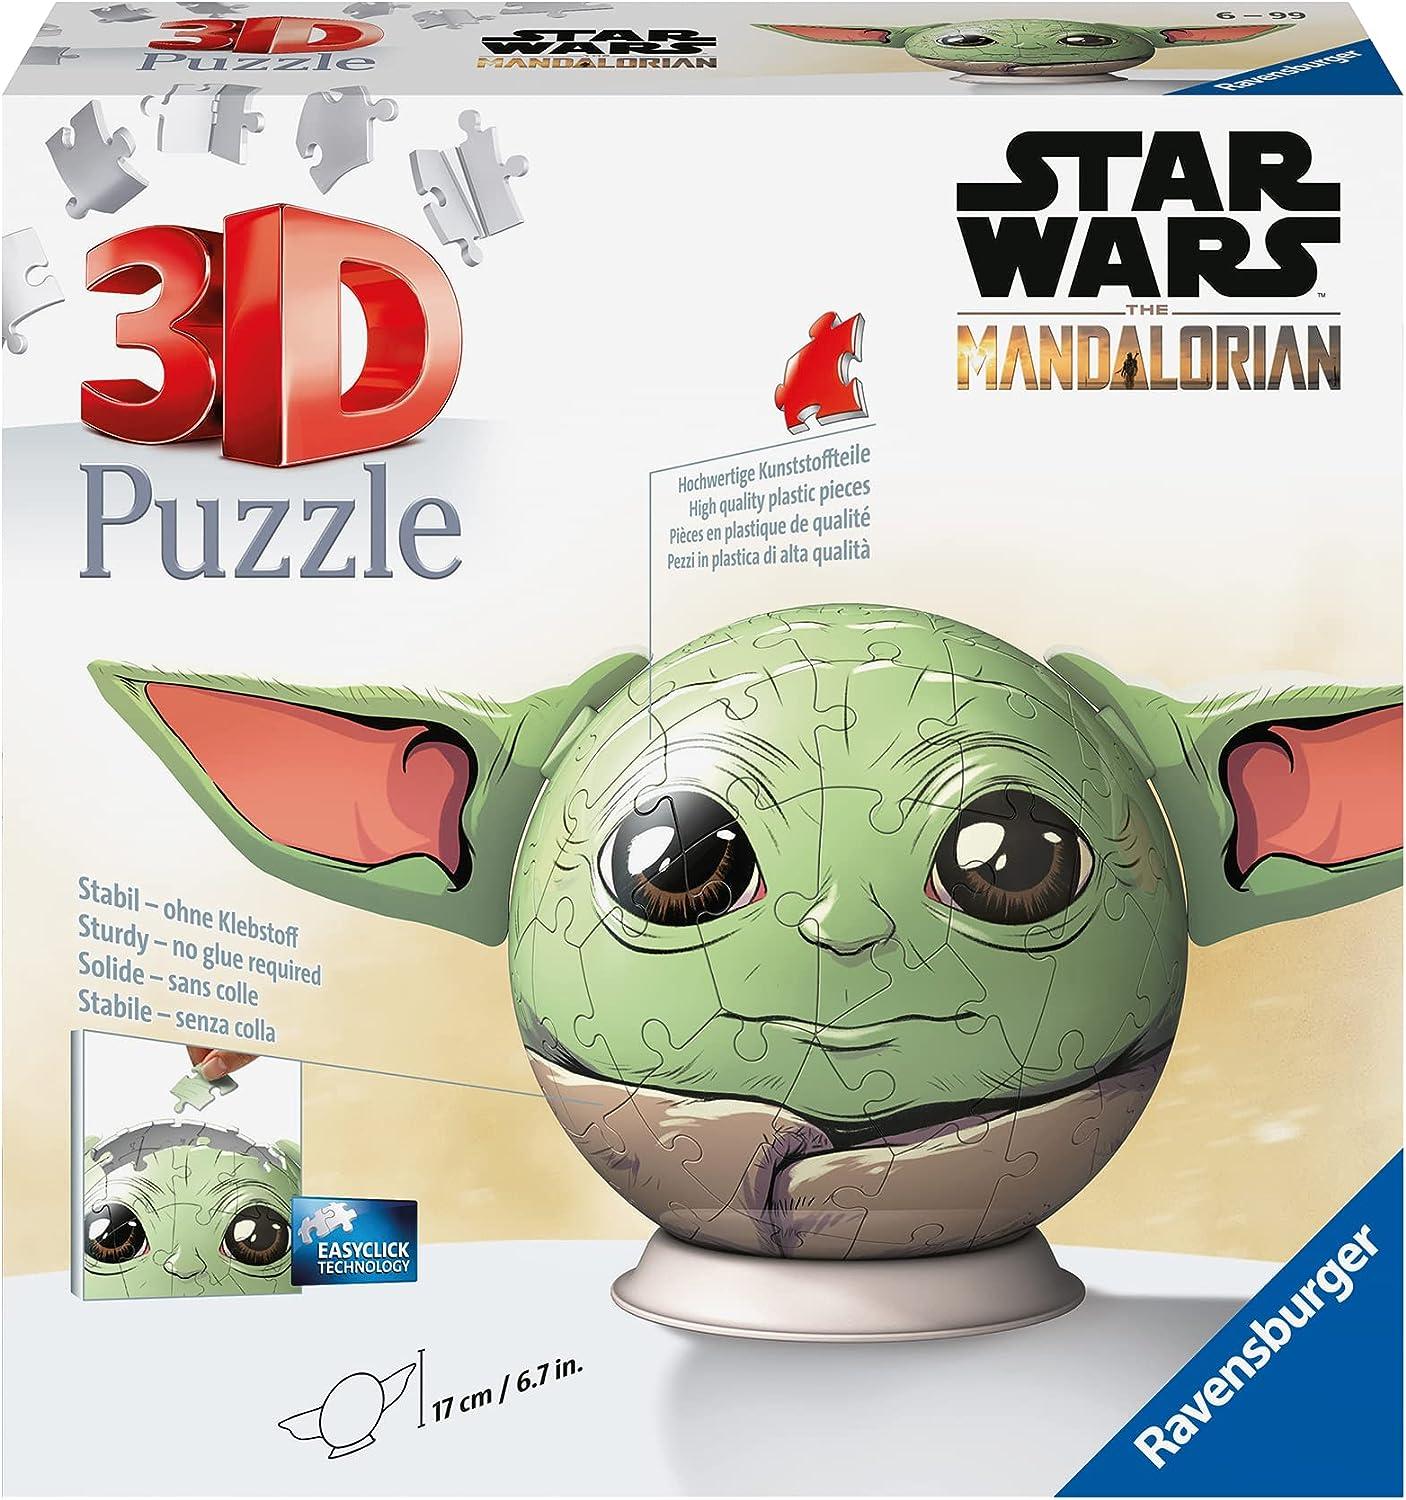 Ravensburger 3D Puzzle - Star Wars The Mandalorian: Puzzle-Ball Grogu mit Ohren